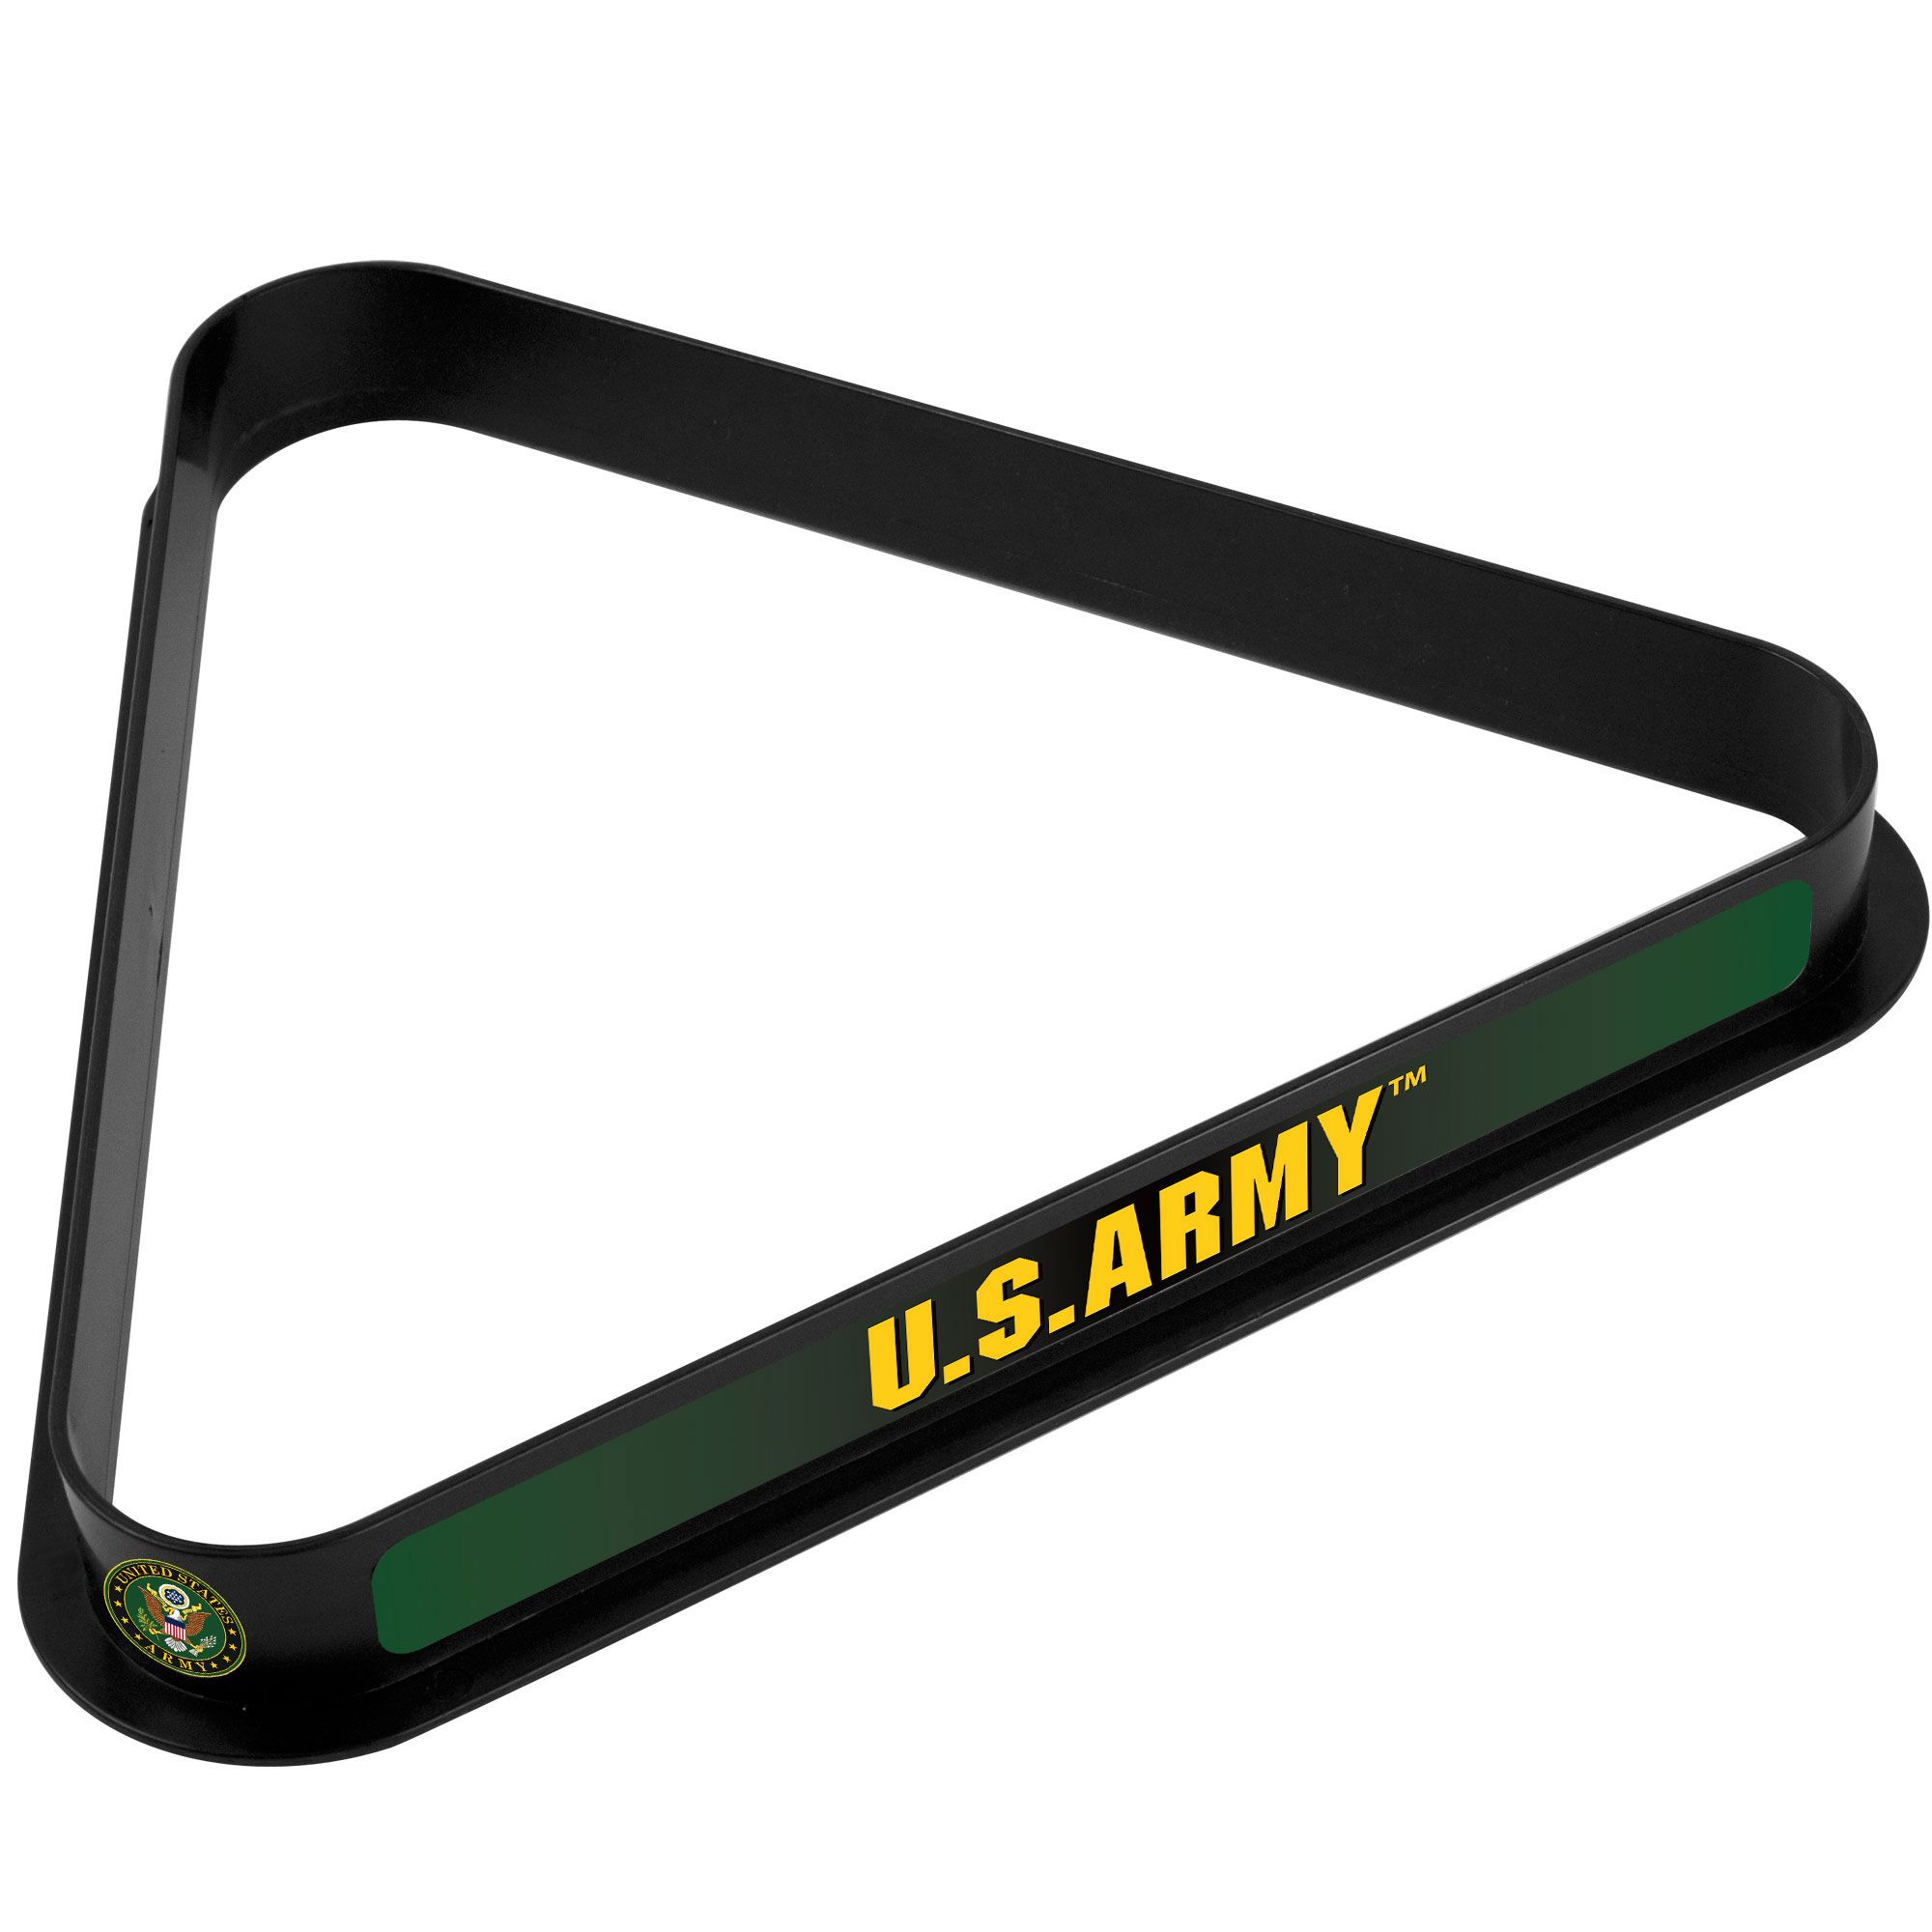 U.S. Army Symbol Billiard Ball Rack